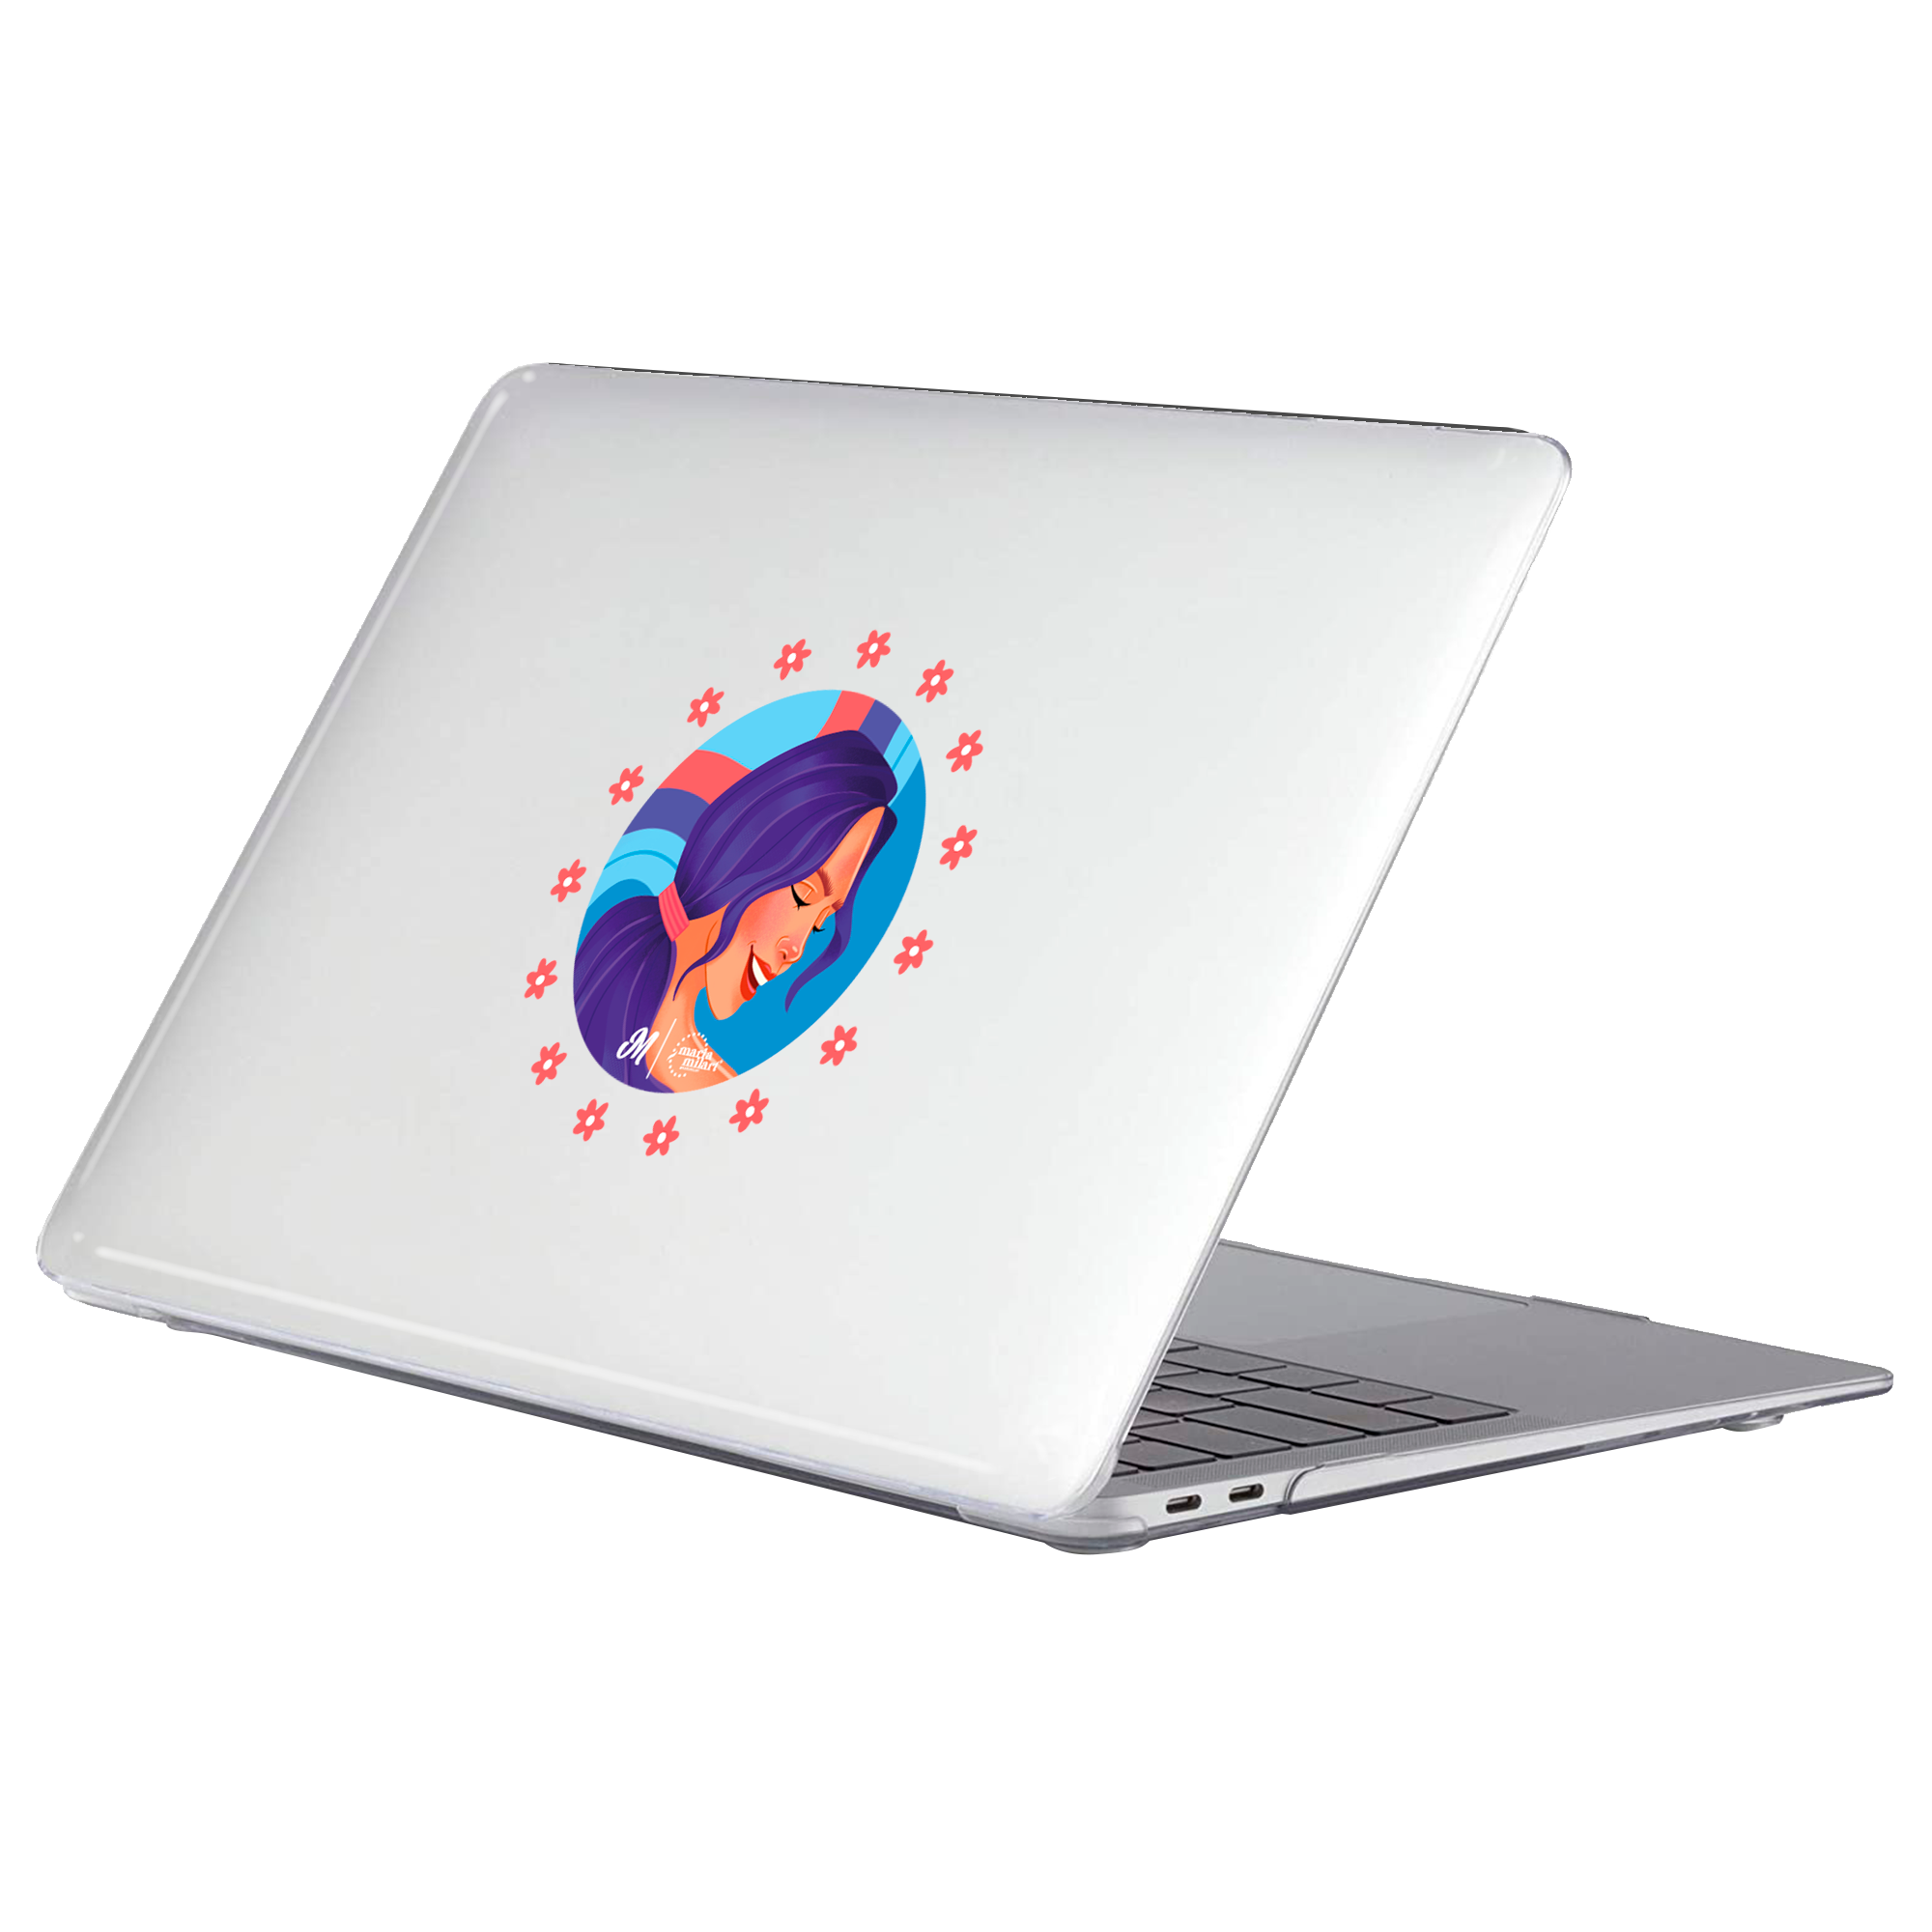 Flores Preciosas MacBook Case - Mandala Cases